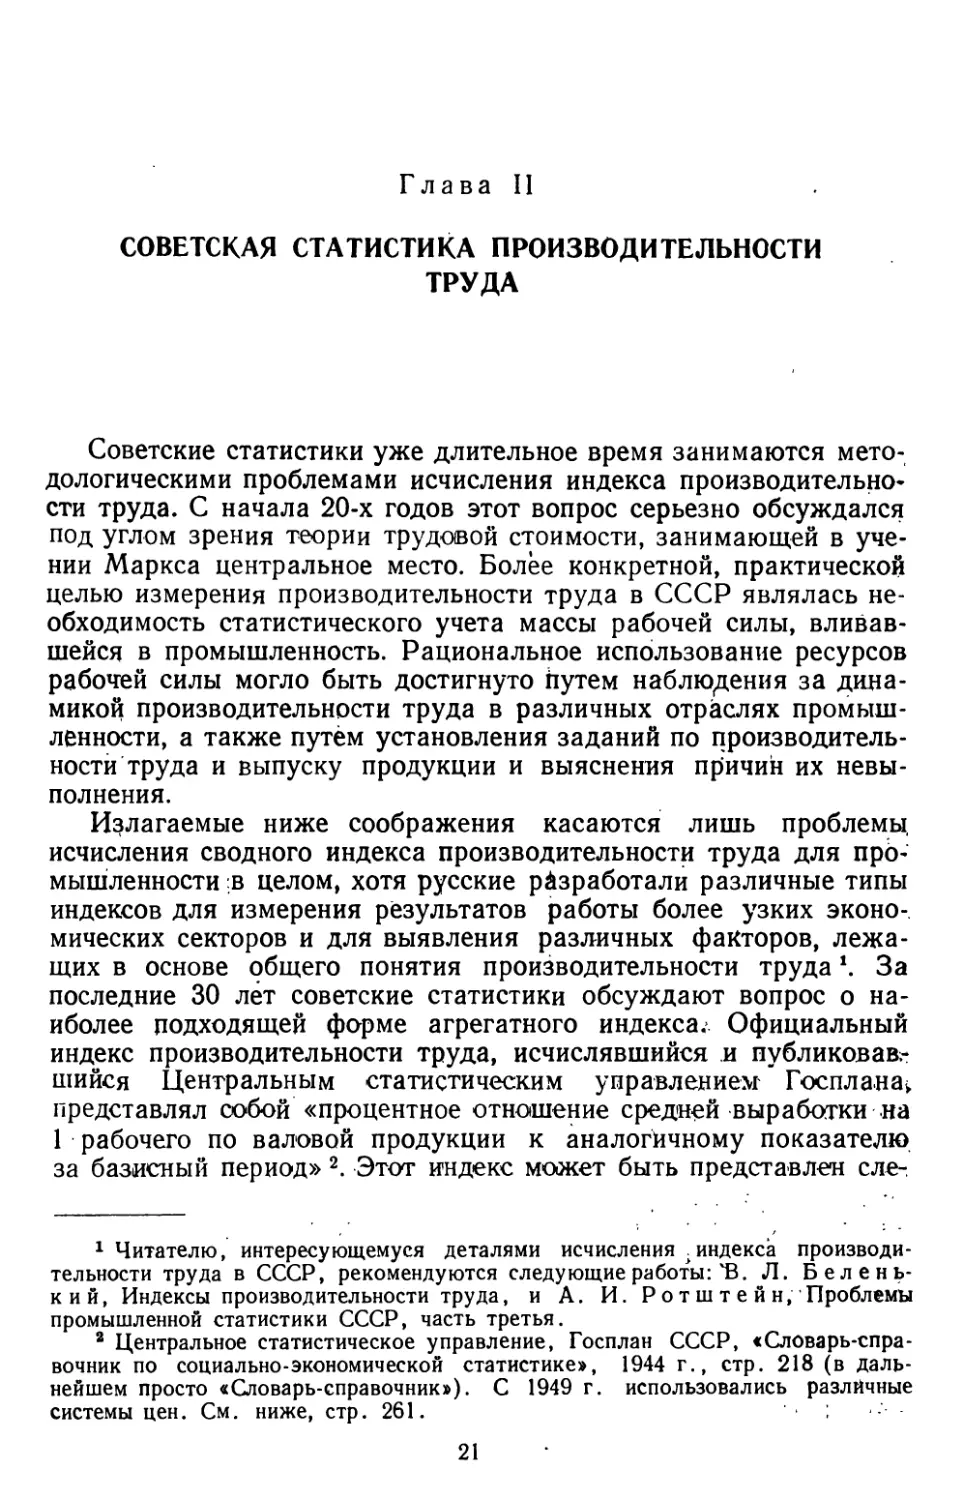 Глава II. Советская статистика производительности труда